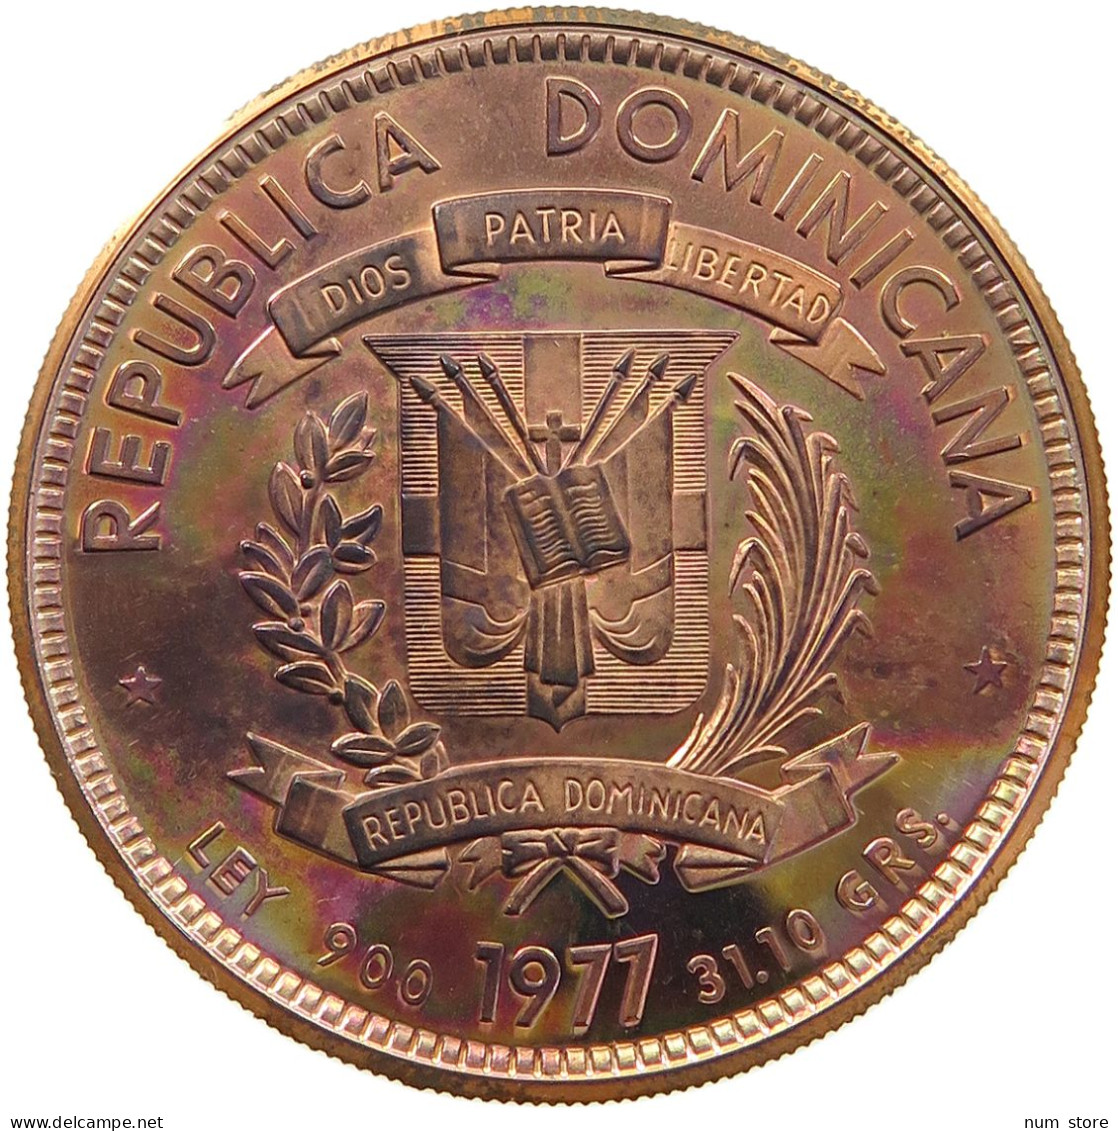 DOMINICAN REPUBLIC 200 PESOS 1977 DOMINICAN REPUBLIC 200 PESOS 1977 COPPER PROOF PATTERN #t084 0125 - Dominicana